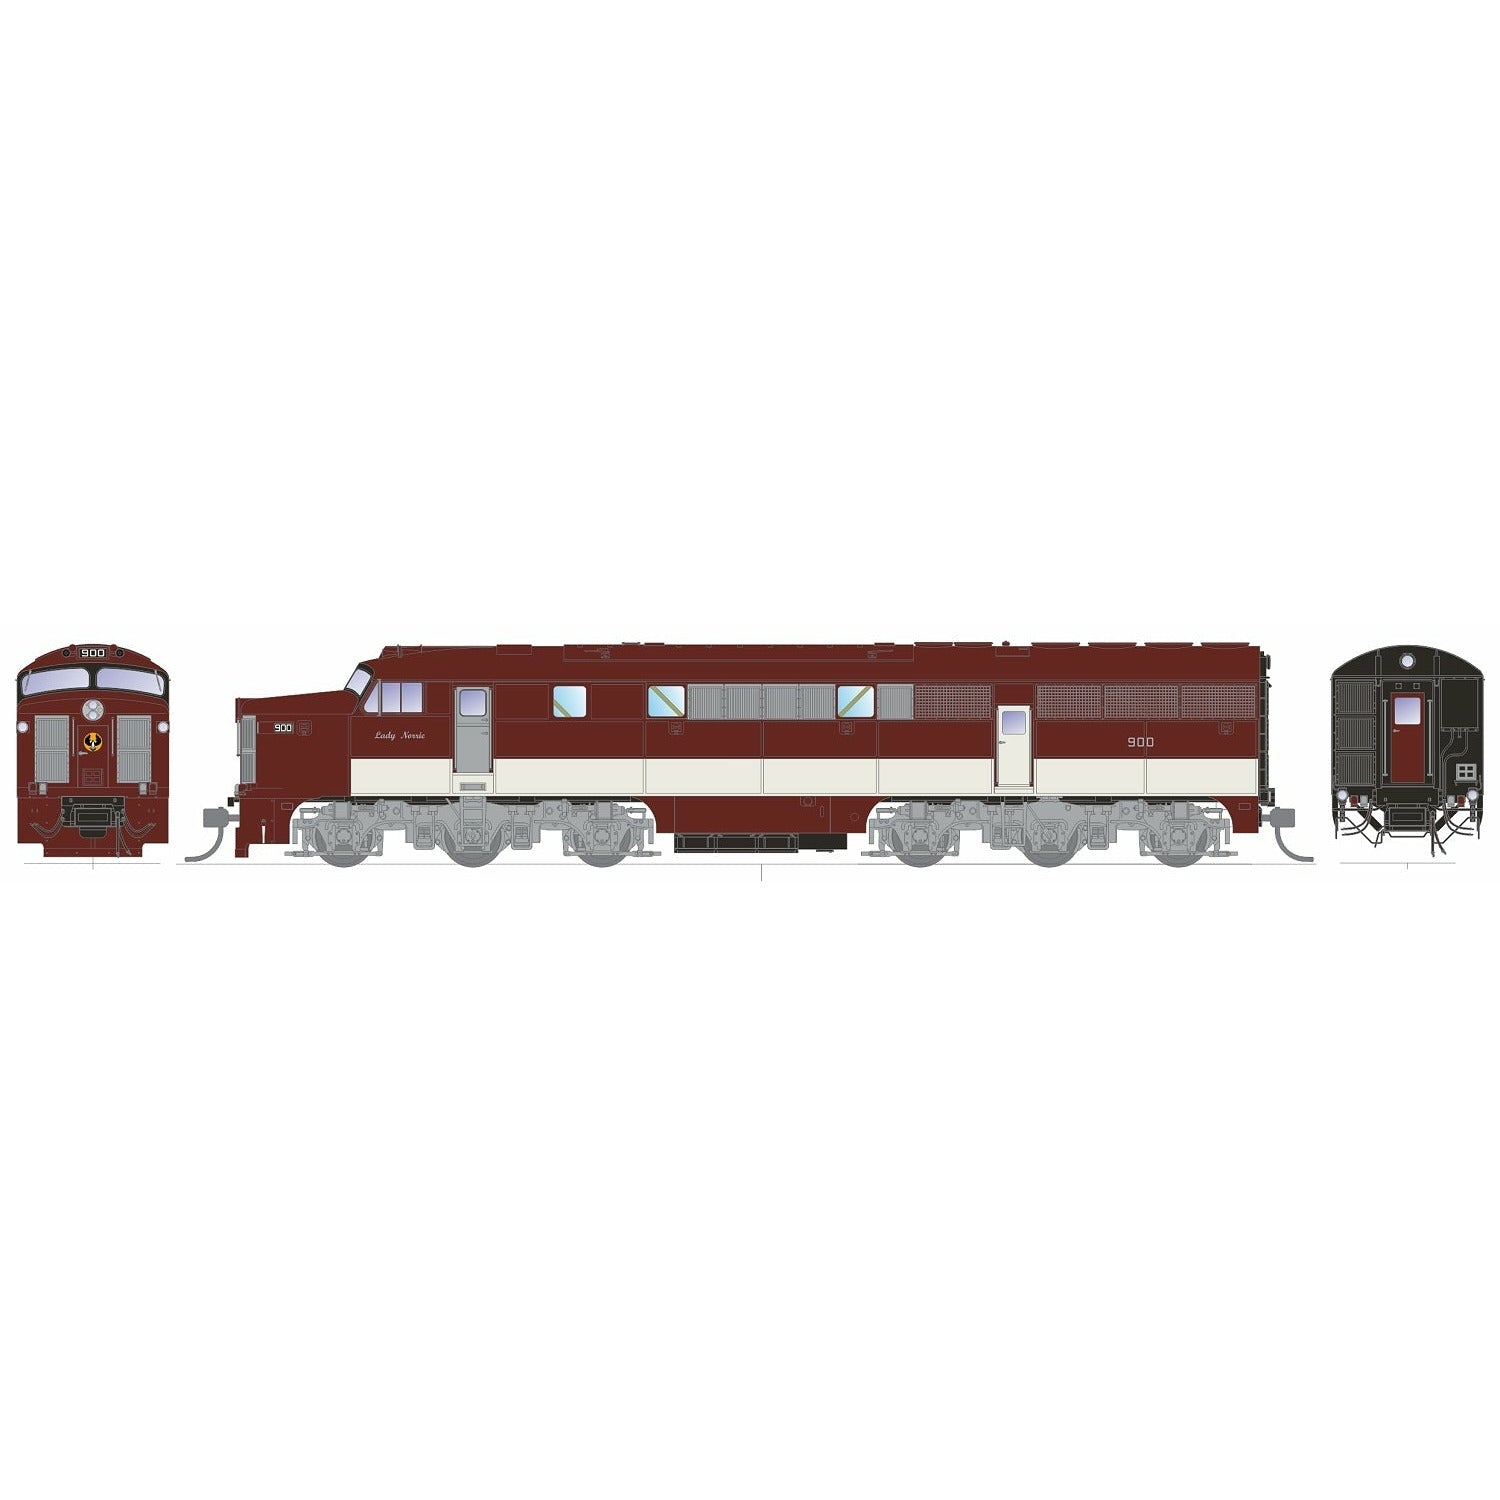 SDS MODELS HO 900 Class Locomotive #900 Preserved 1988 - DCC Sound